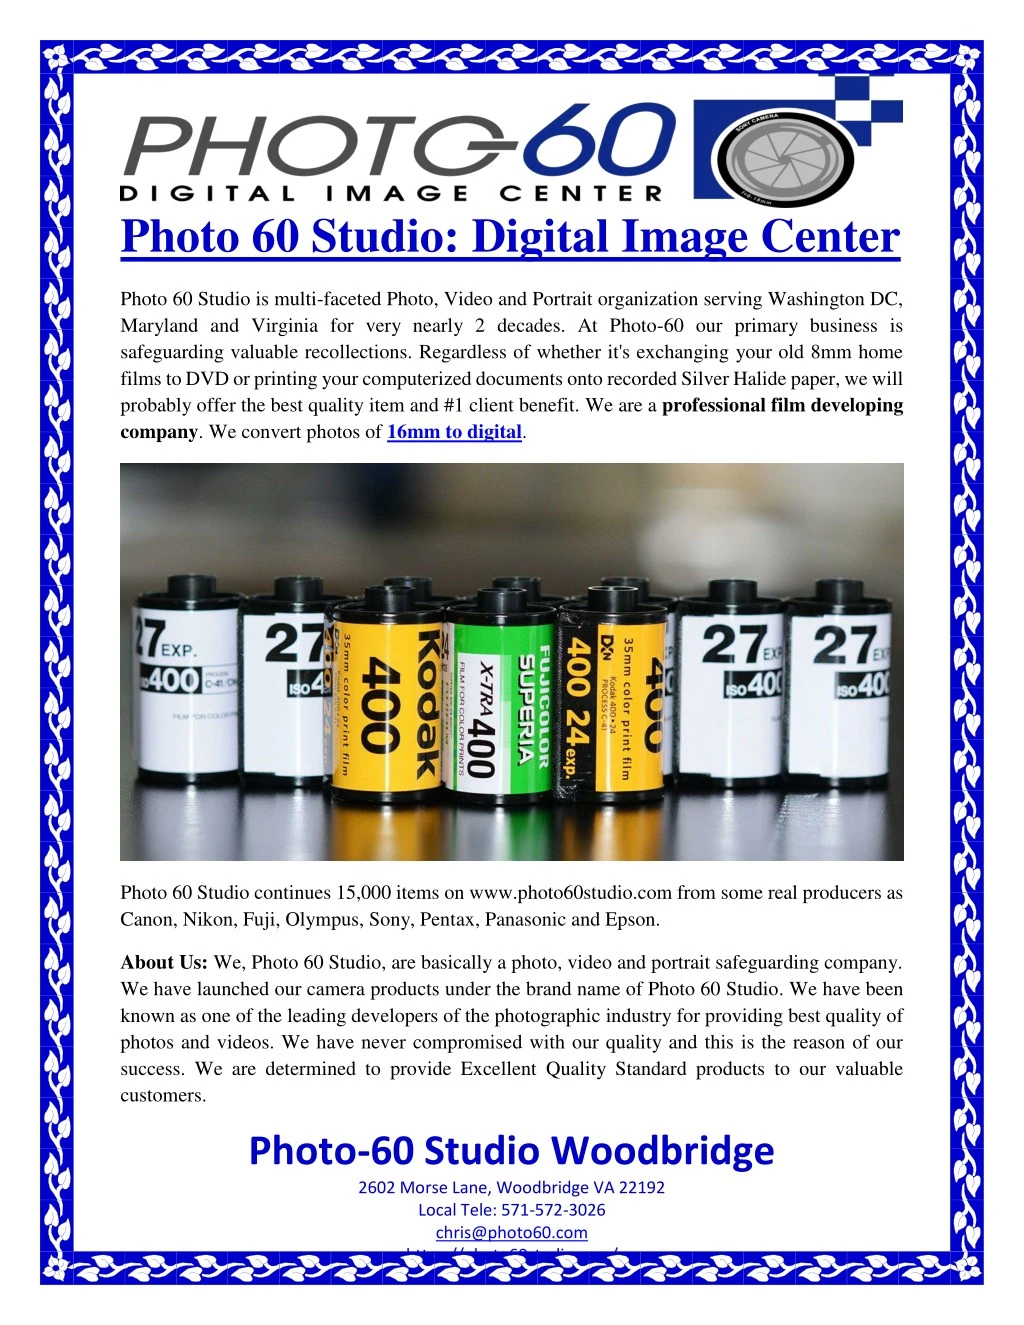 photo 60 studio digital image center